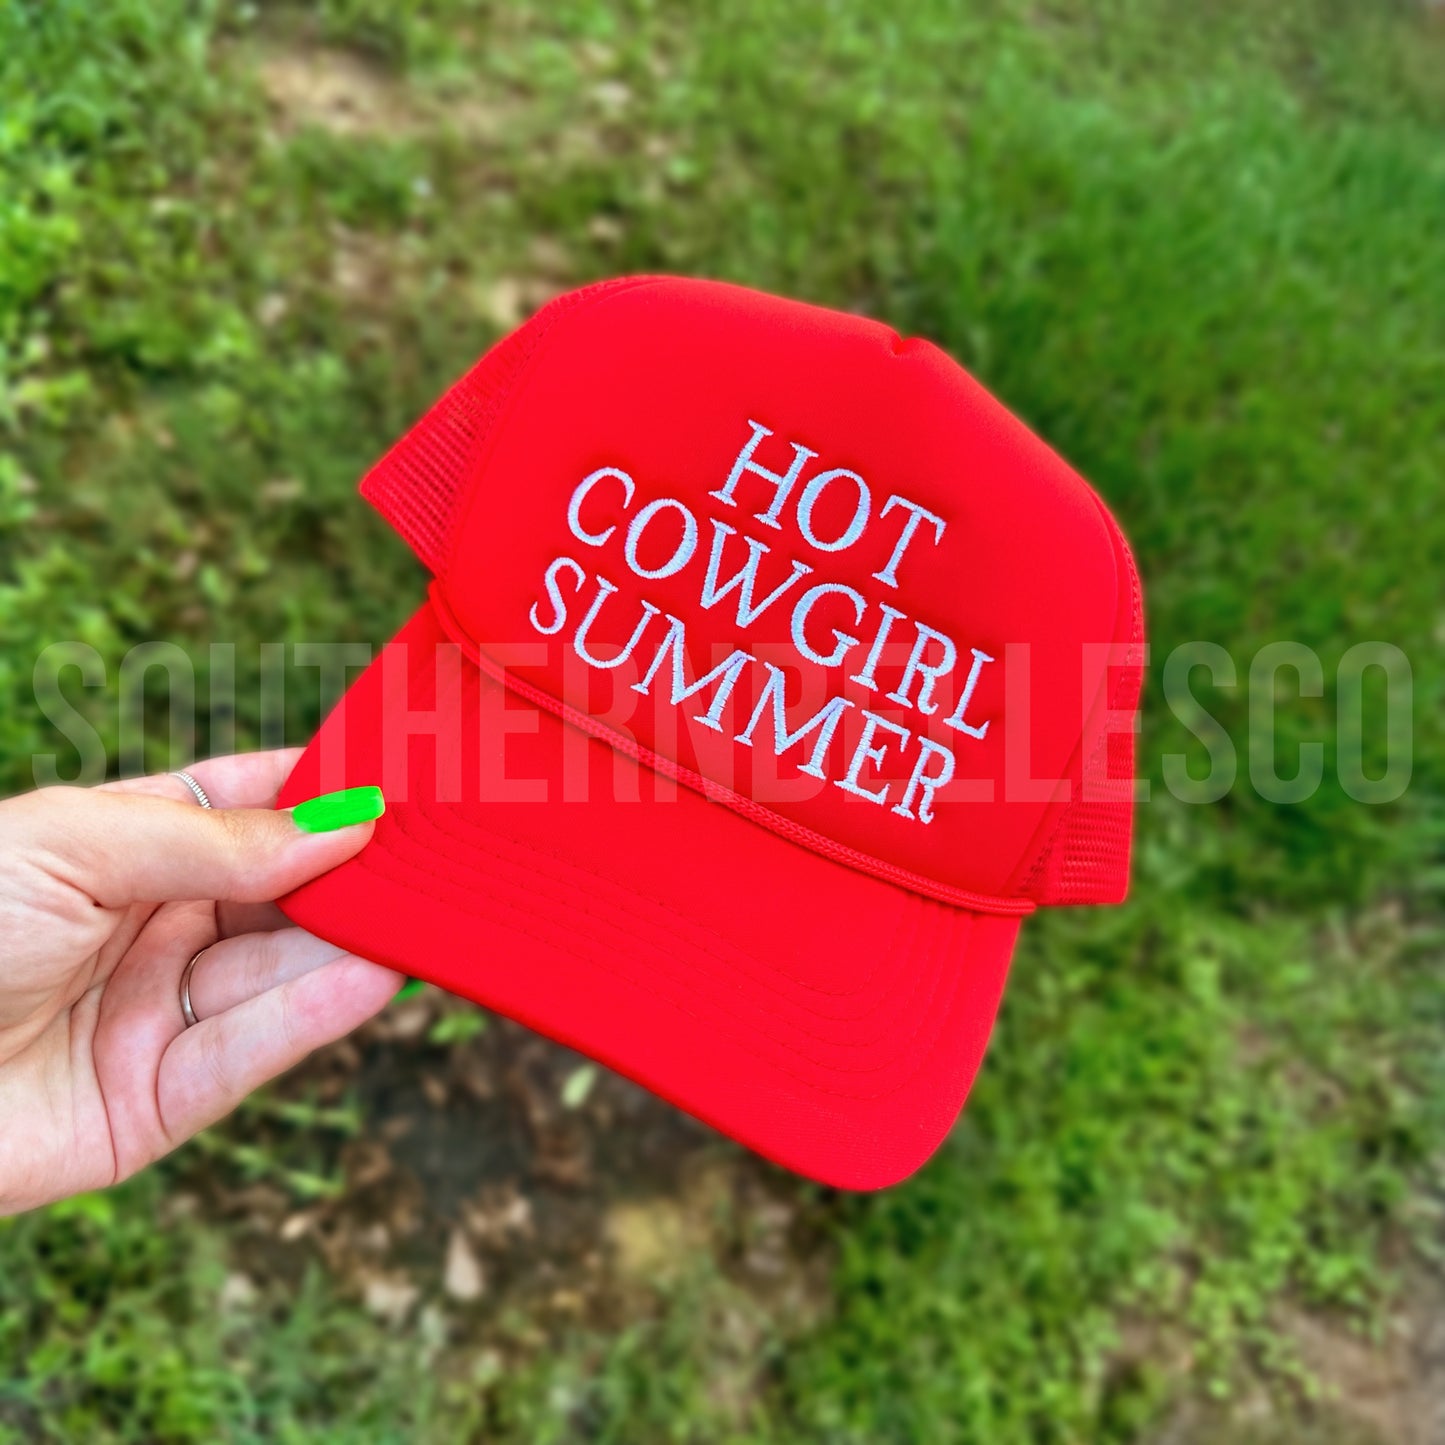 Hot Cowgirl Summer Trucker Hats